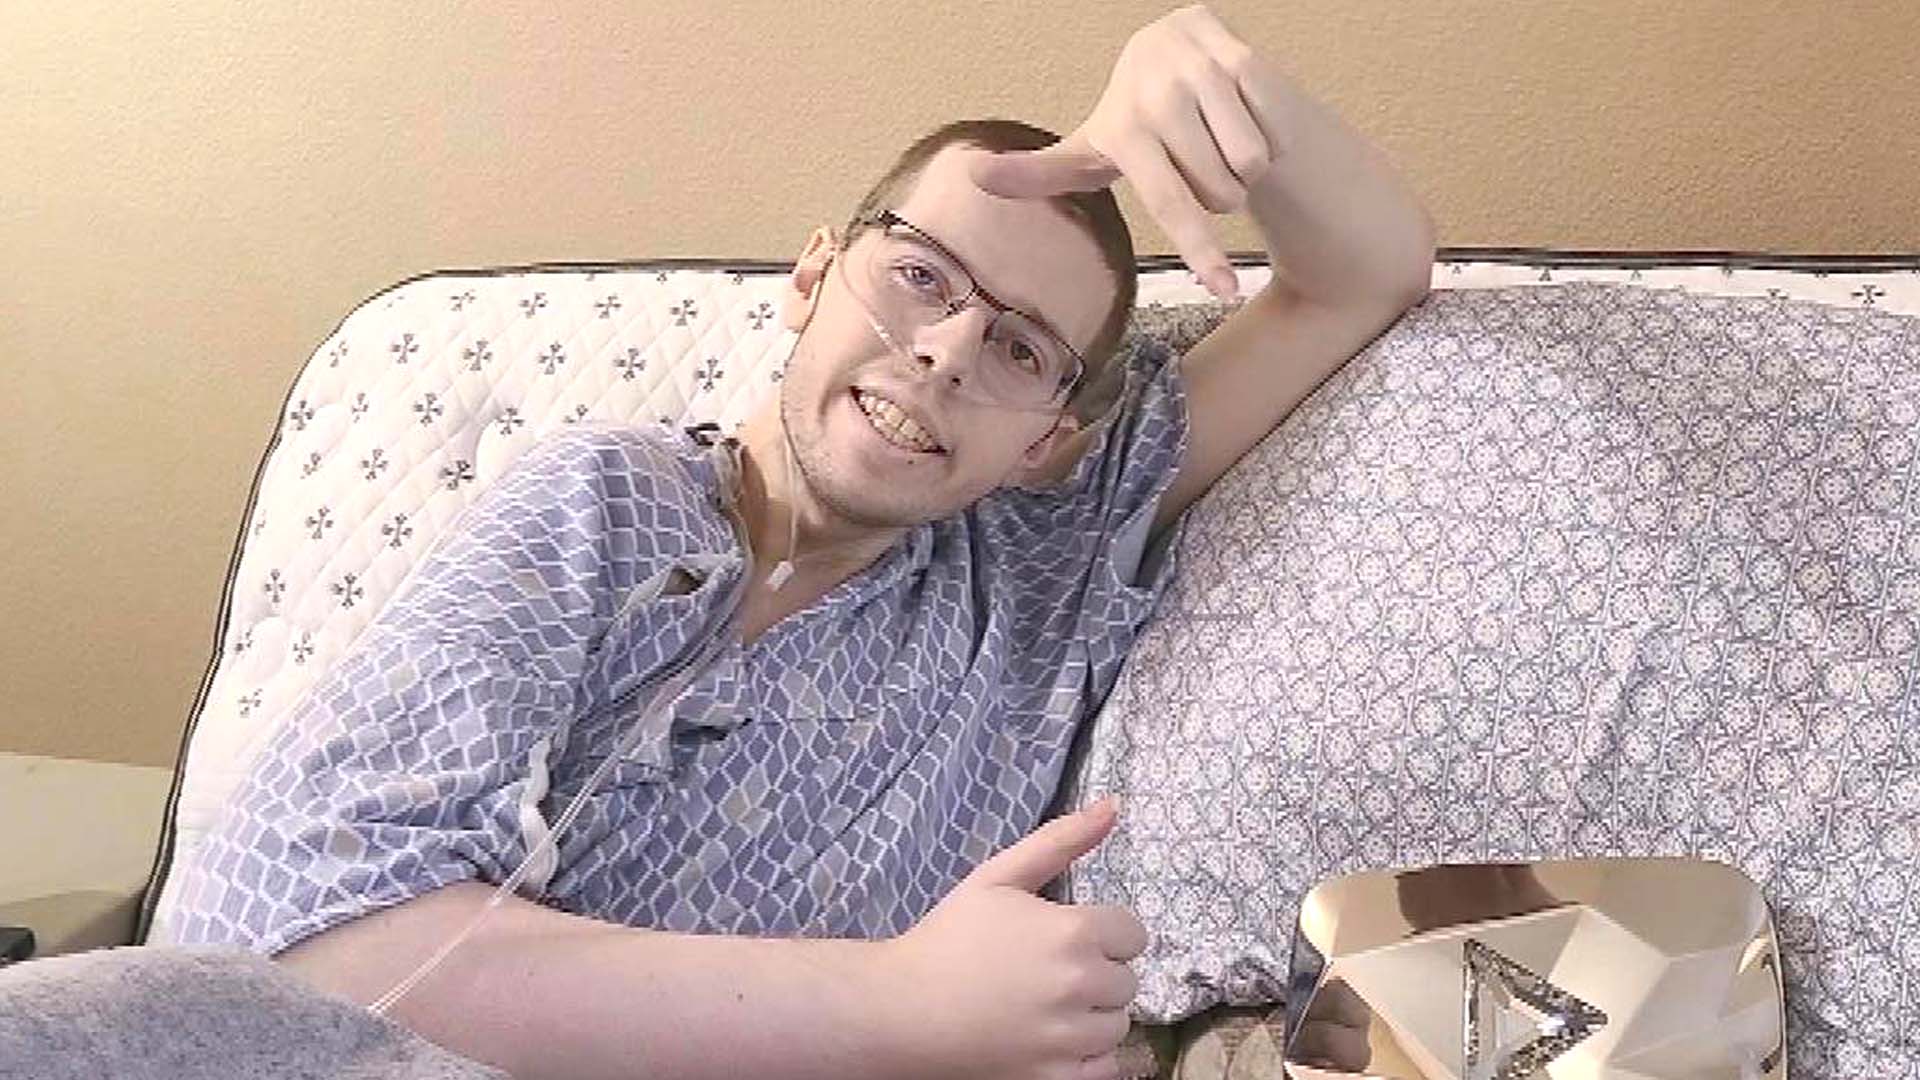 Technoblade, Popular Minecraft r, Dies at 23 After Cancer